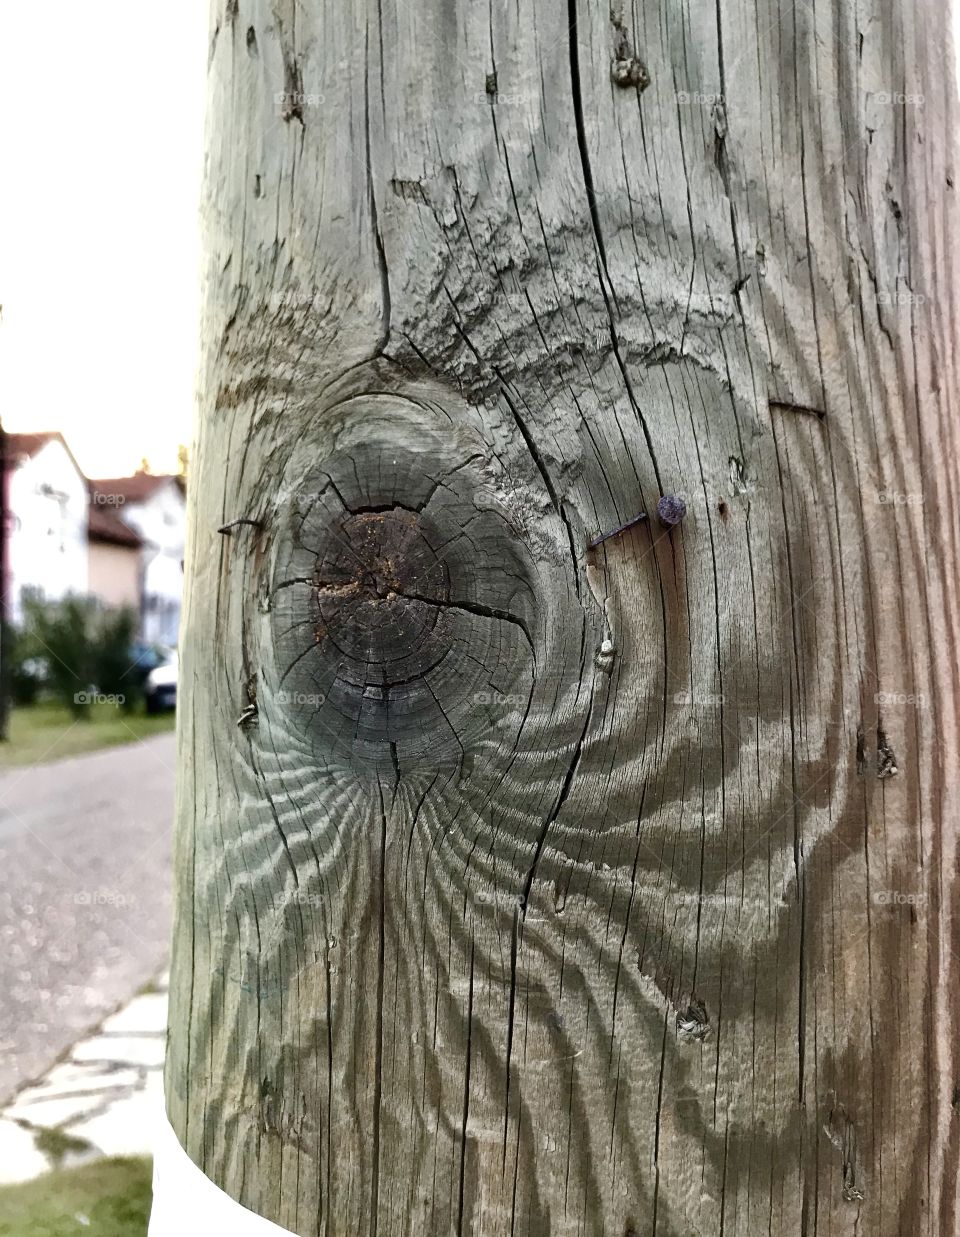 Wooden log street light,beautiful and artistic close up.